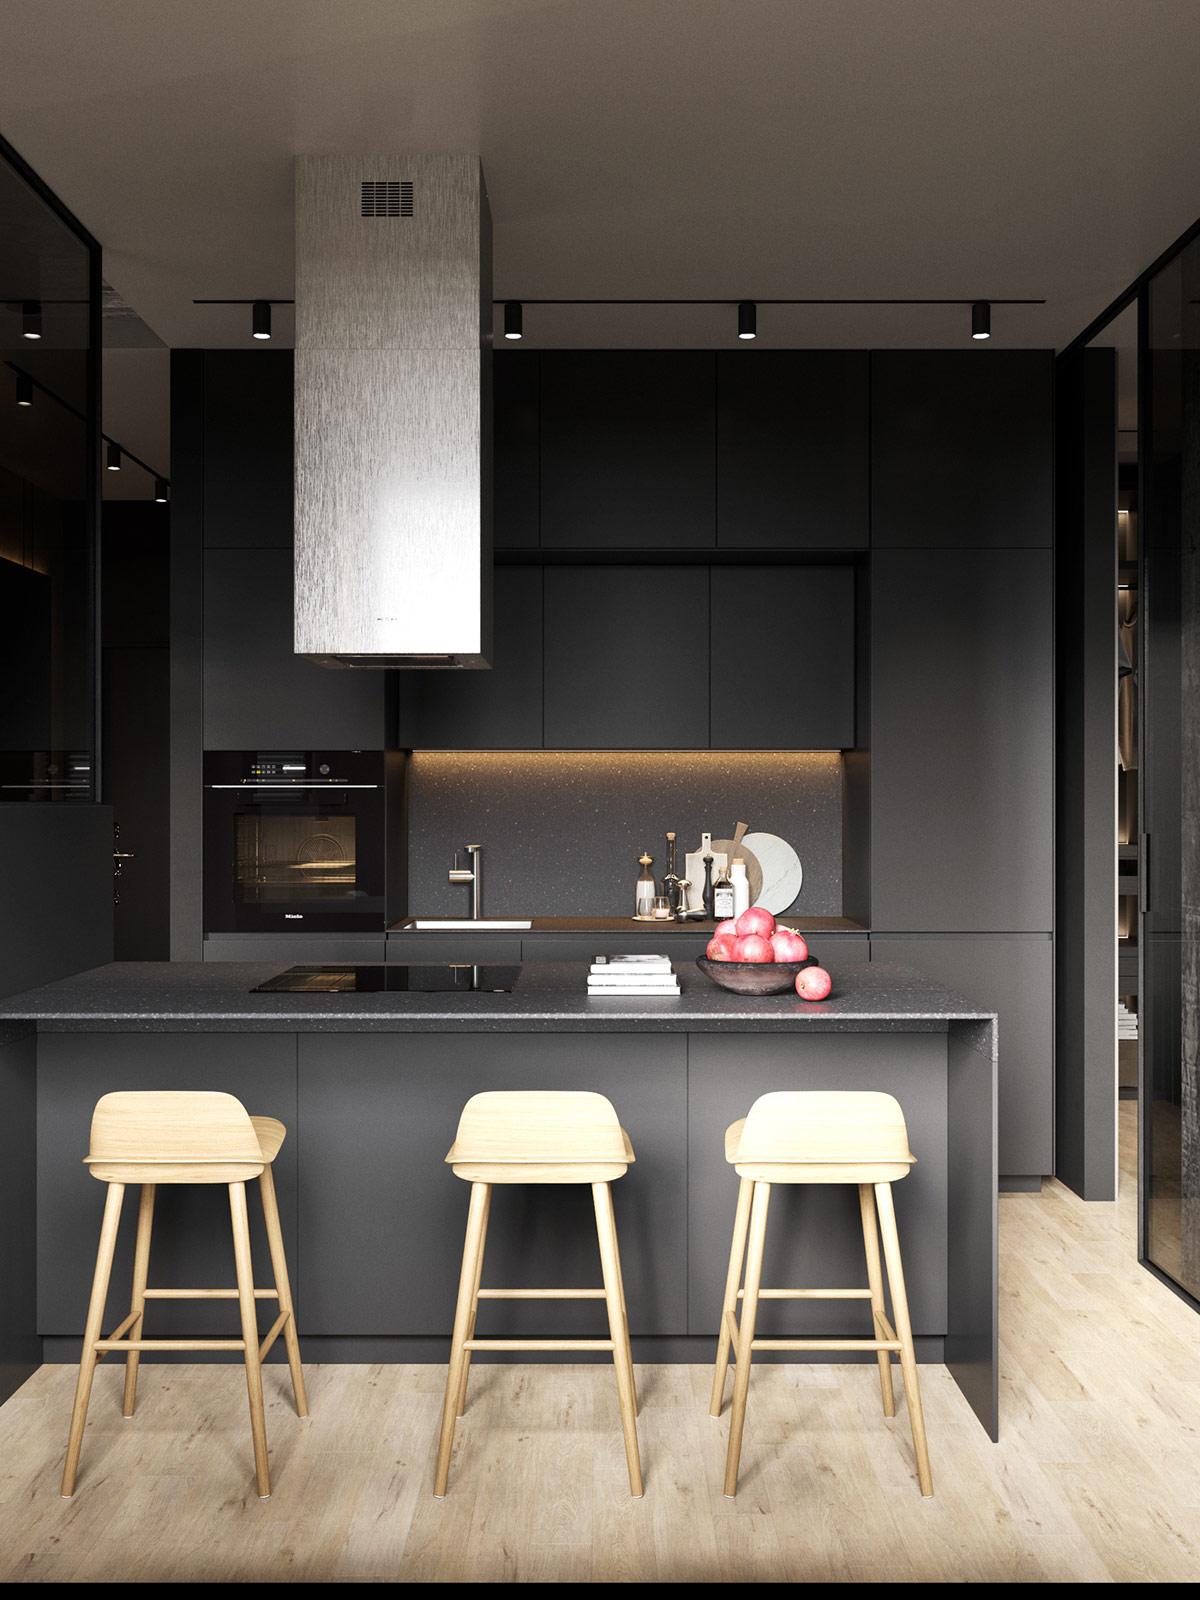 Sleek Black and Wood Kitchen Design in Singapore